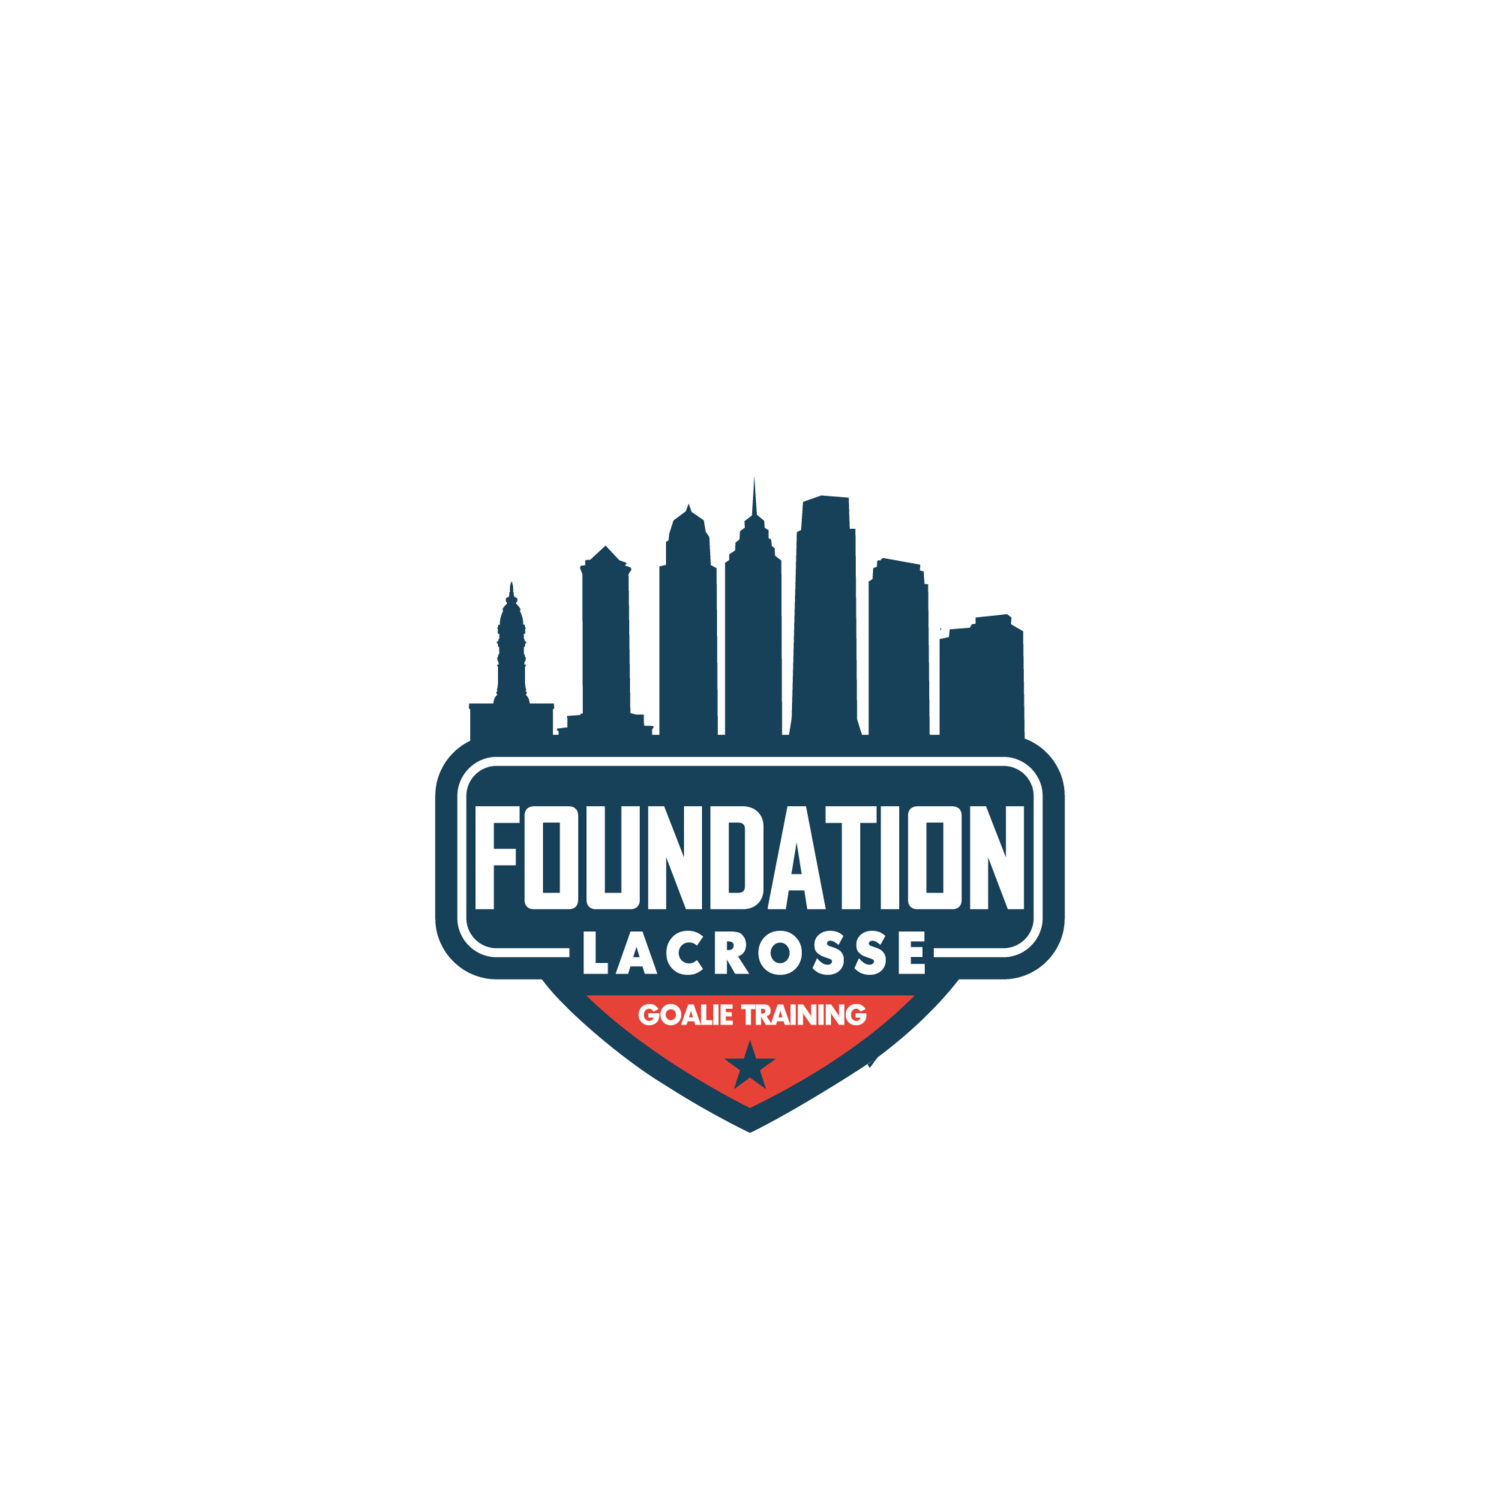 Foundation Lacrosse